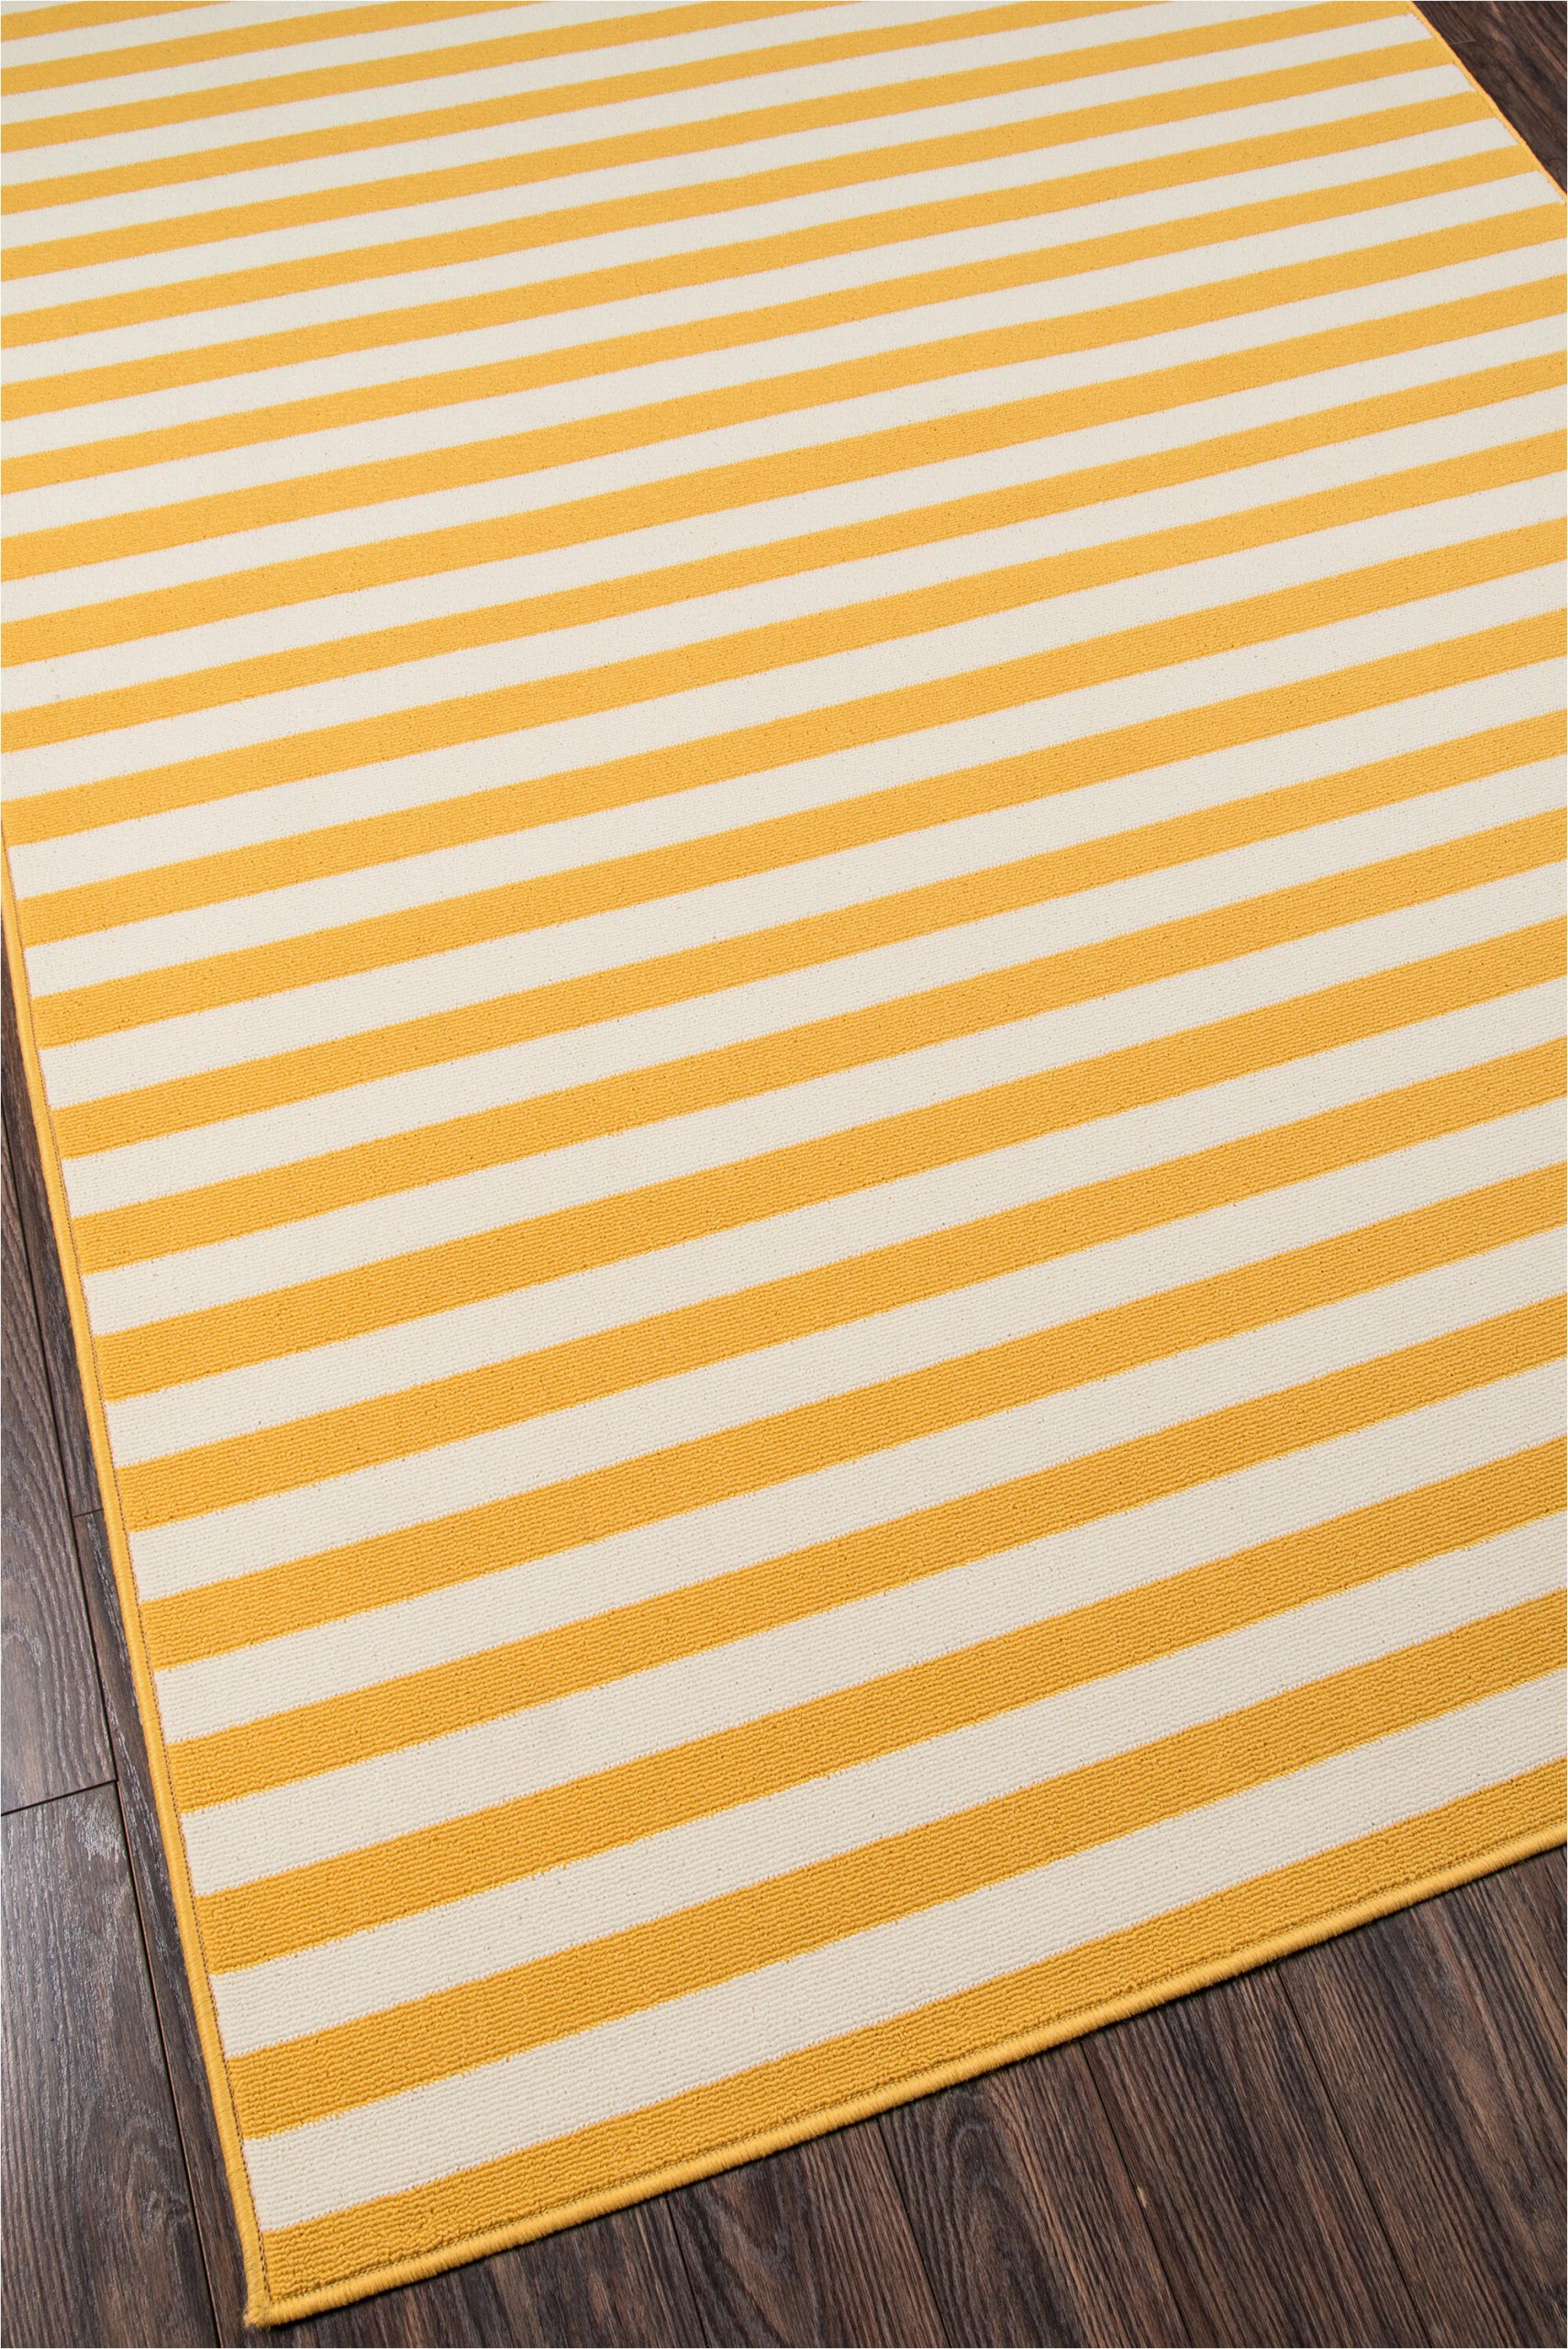 halliday striped yellowwhite indoor outdoor area rug